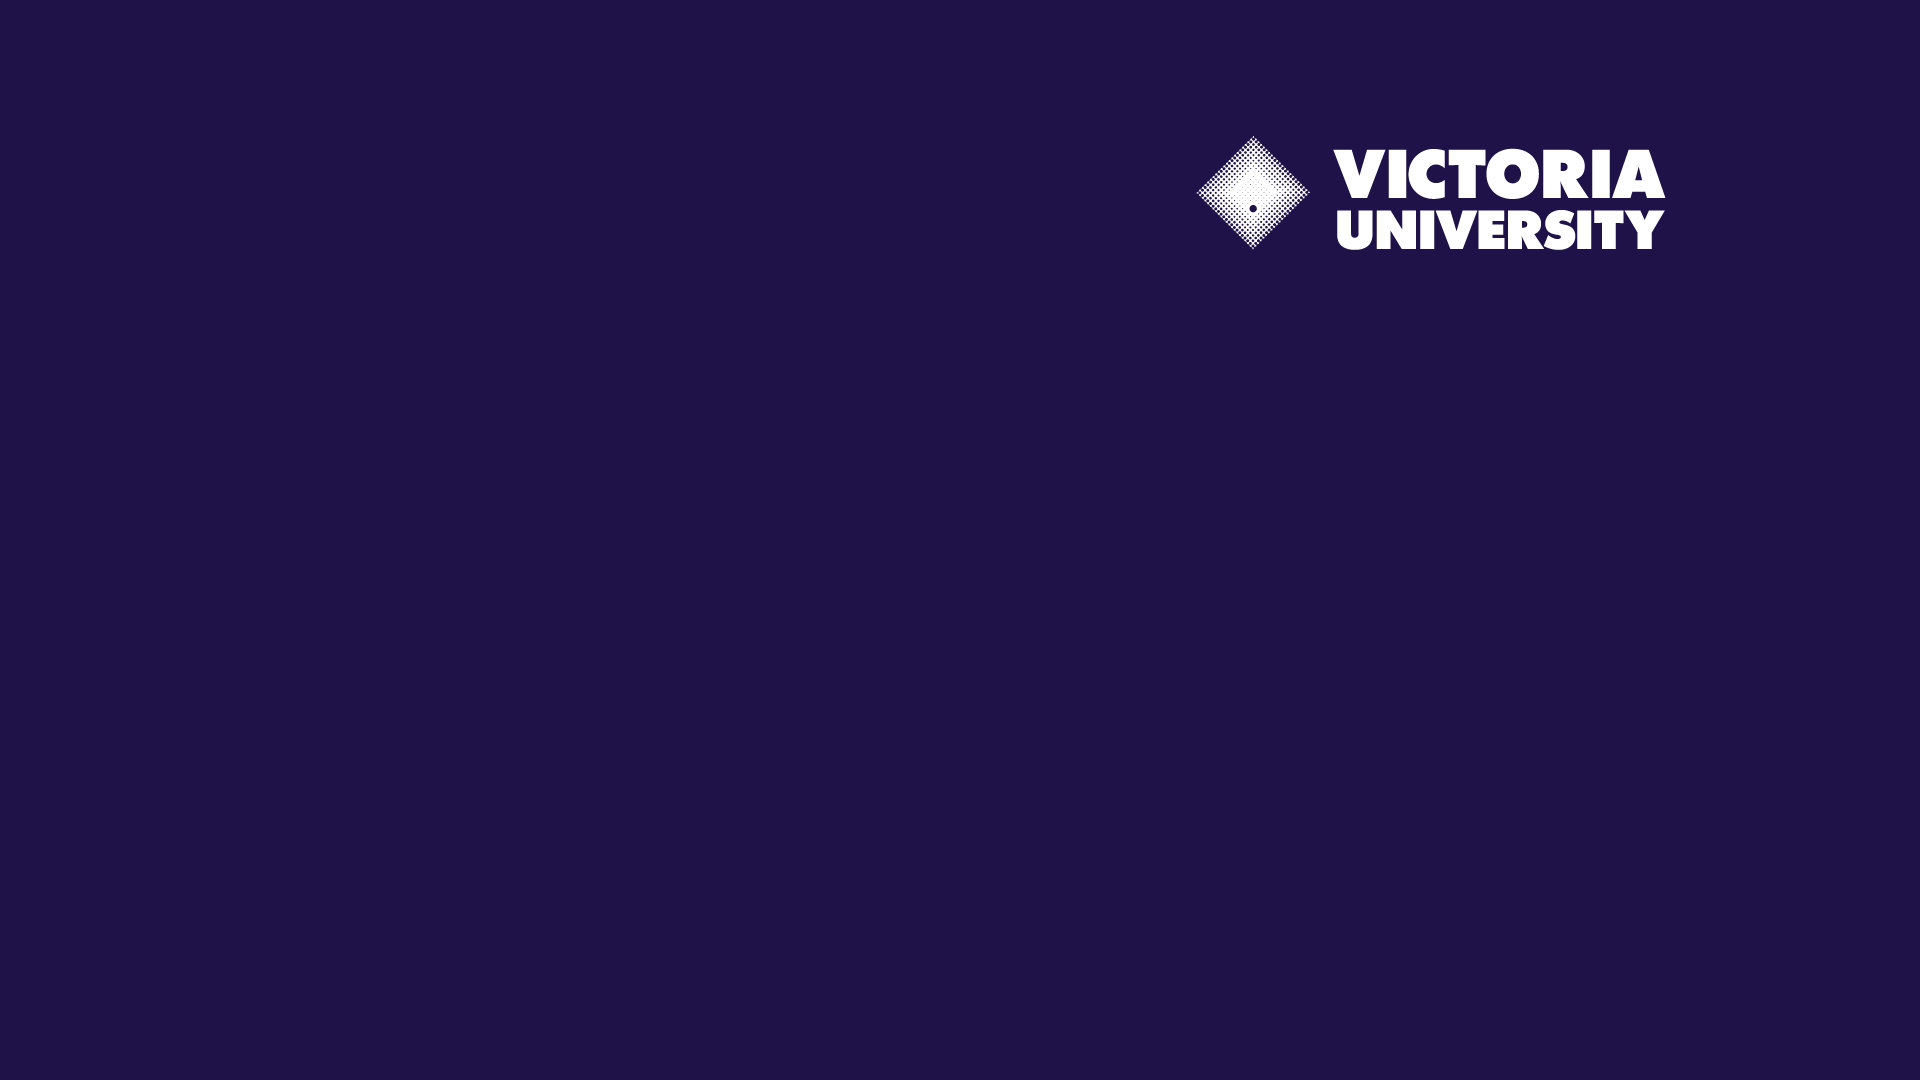 Zoom Virtual Background with Victoria University logo